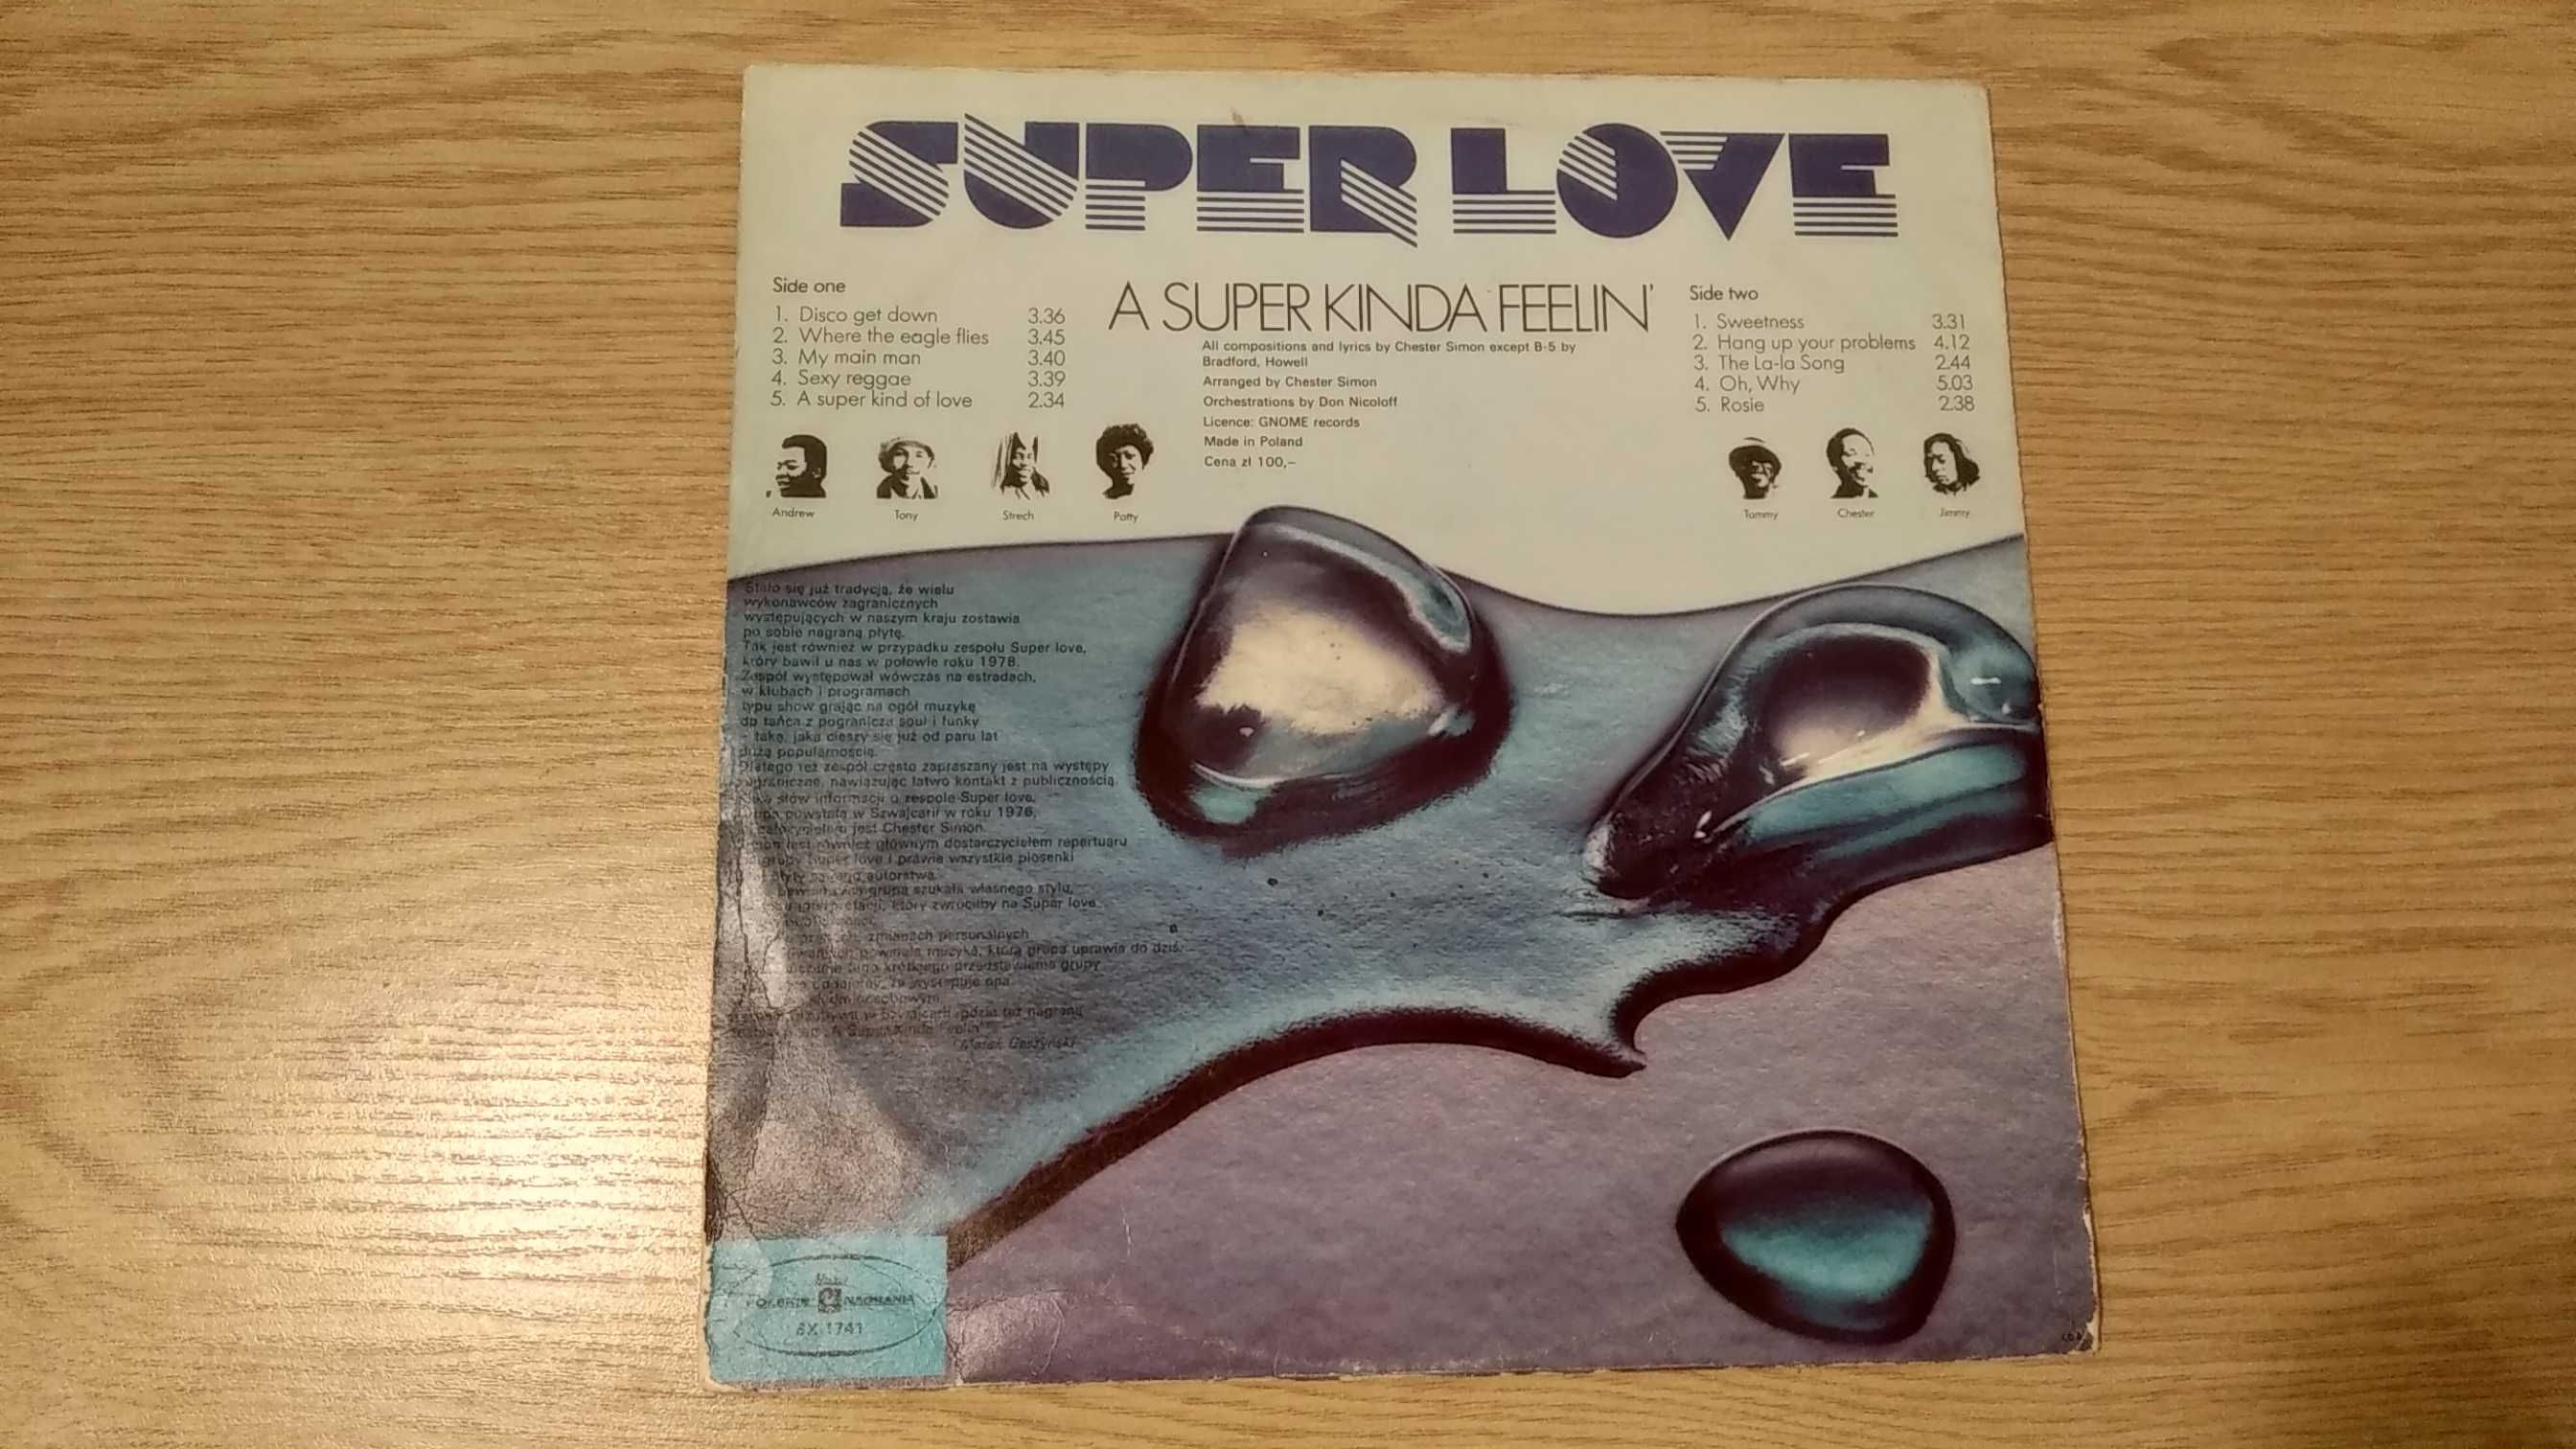 Winyl Super Love - A Super Kinda Feelin' VG gratis folia